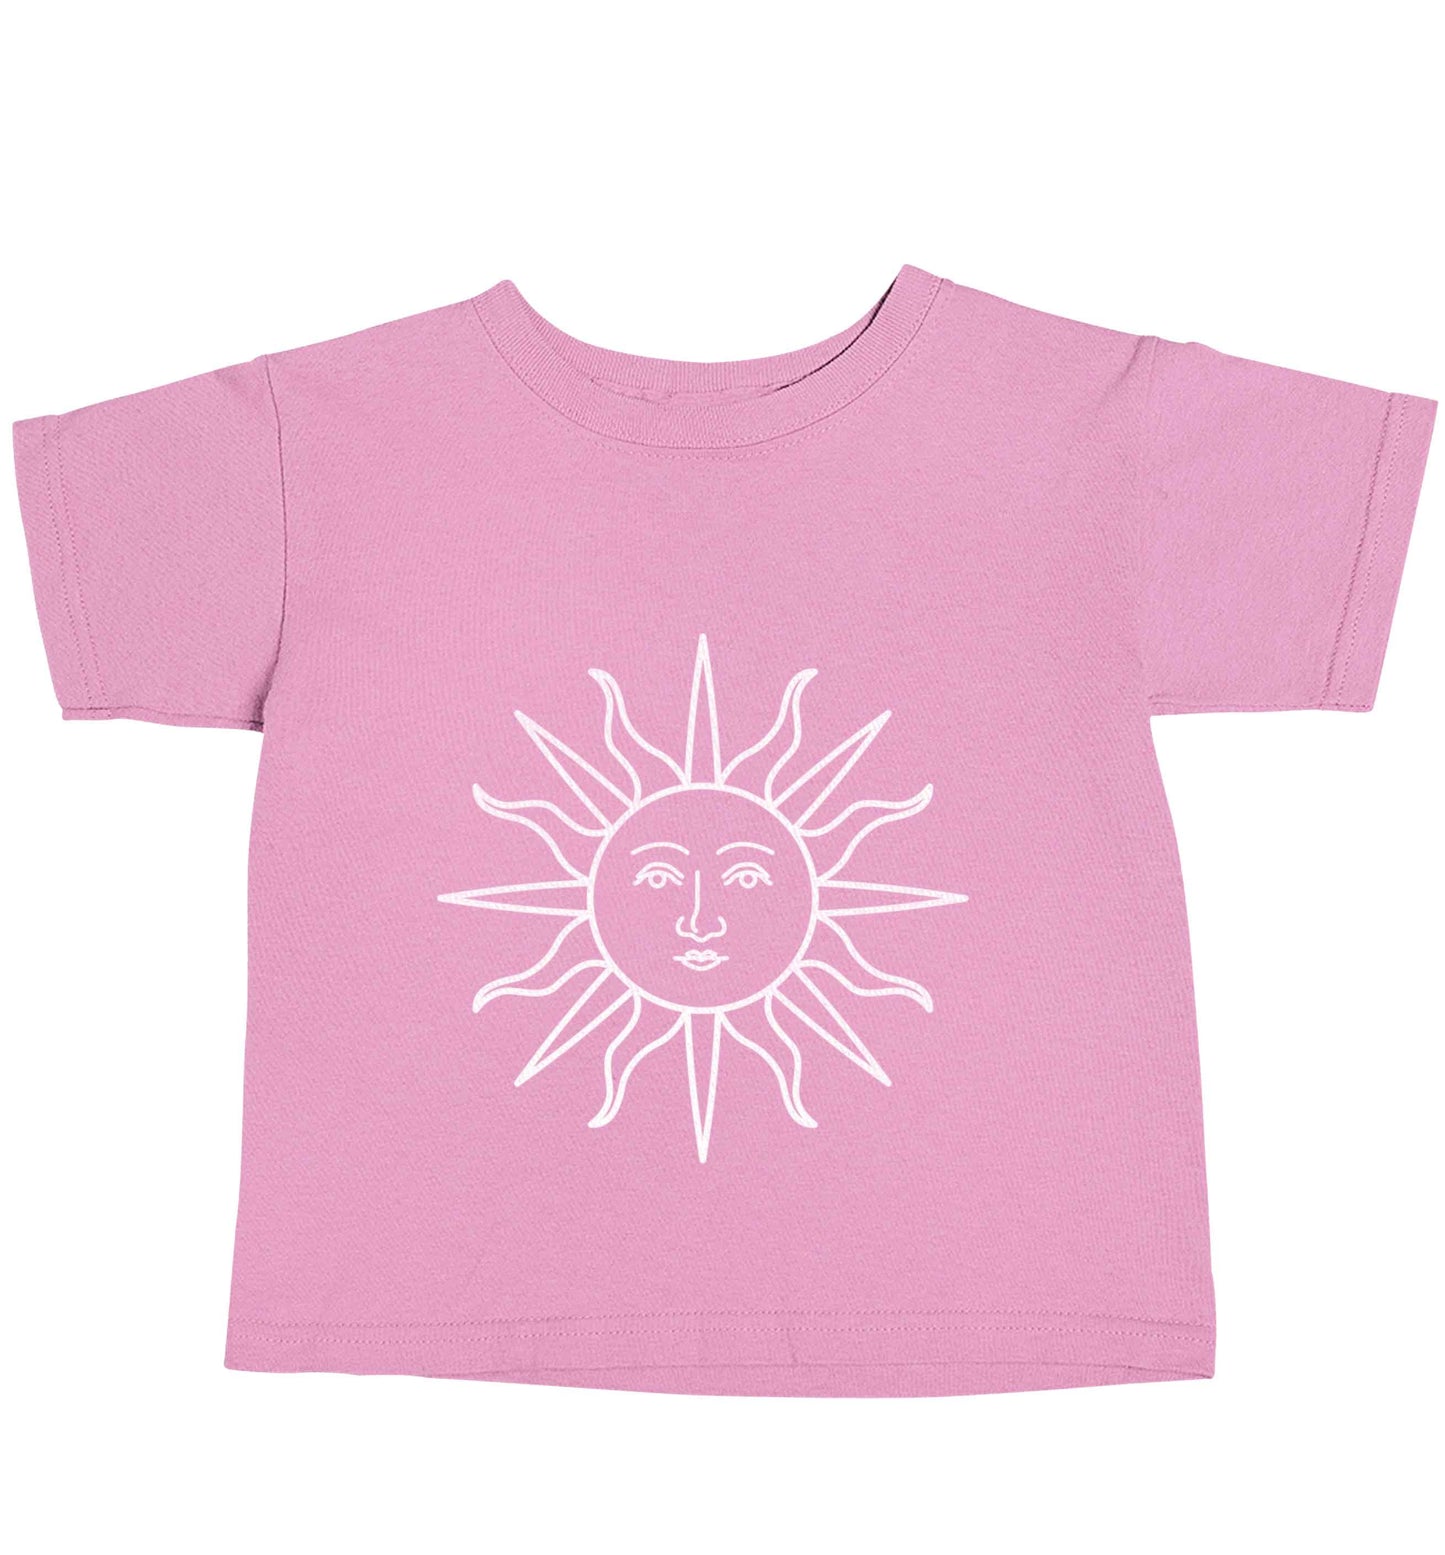 Sun face illustration light pink baby toddler Tshirt 2 Years